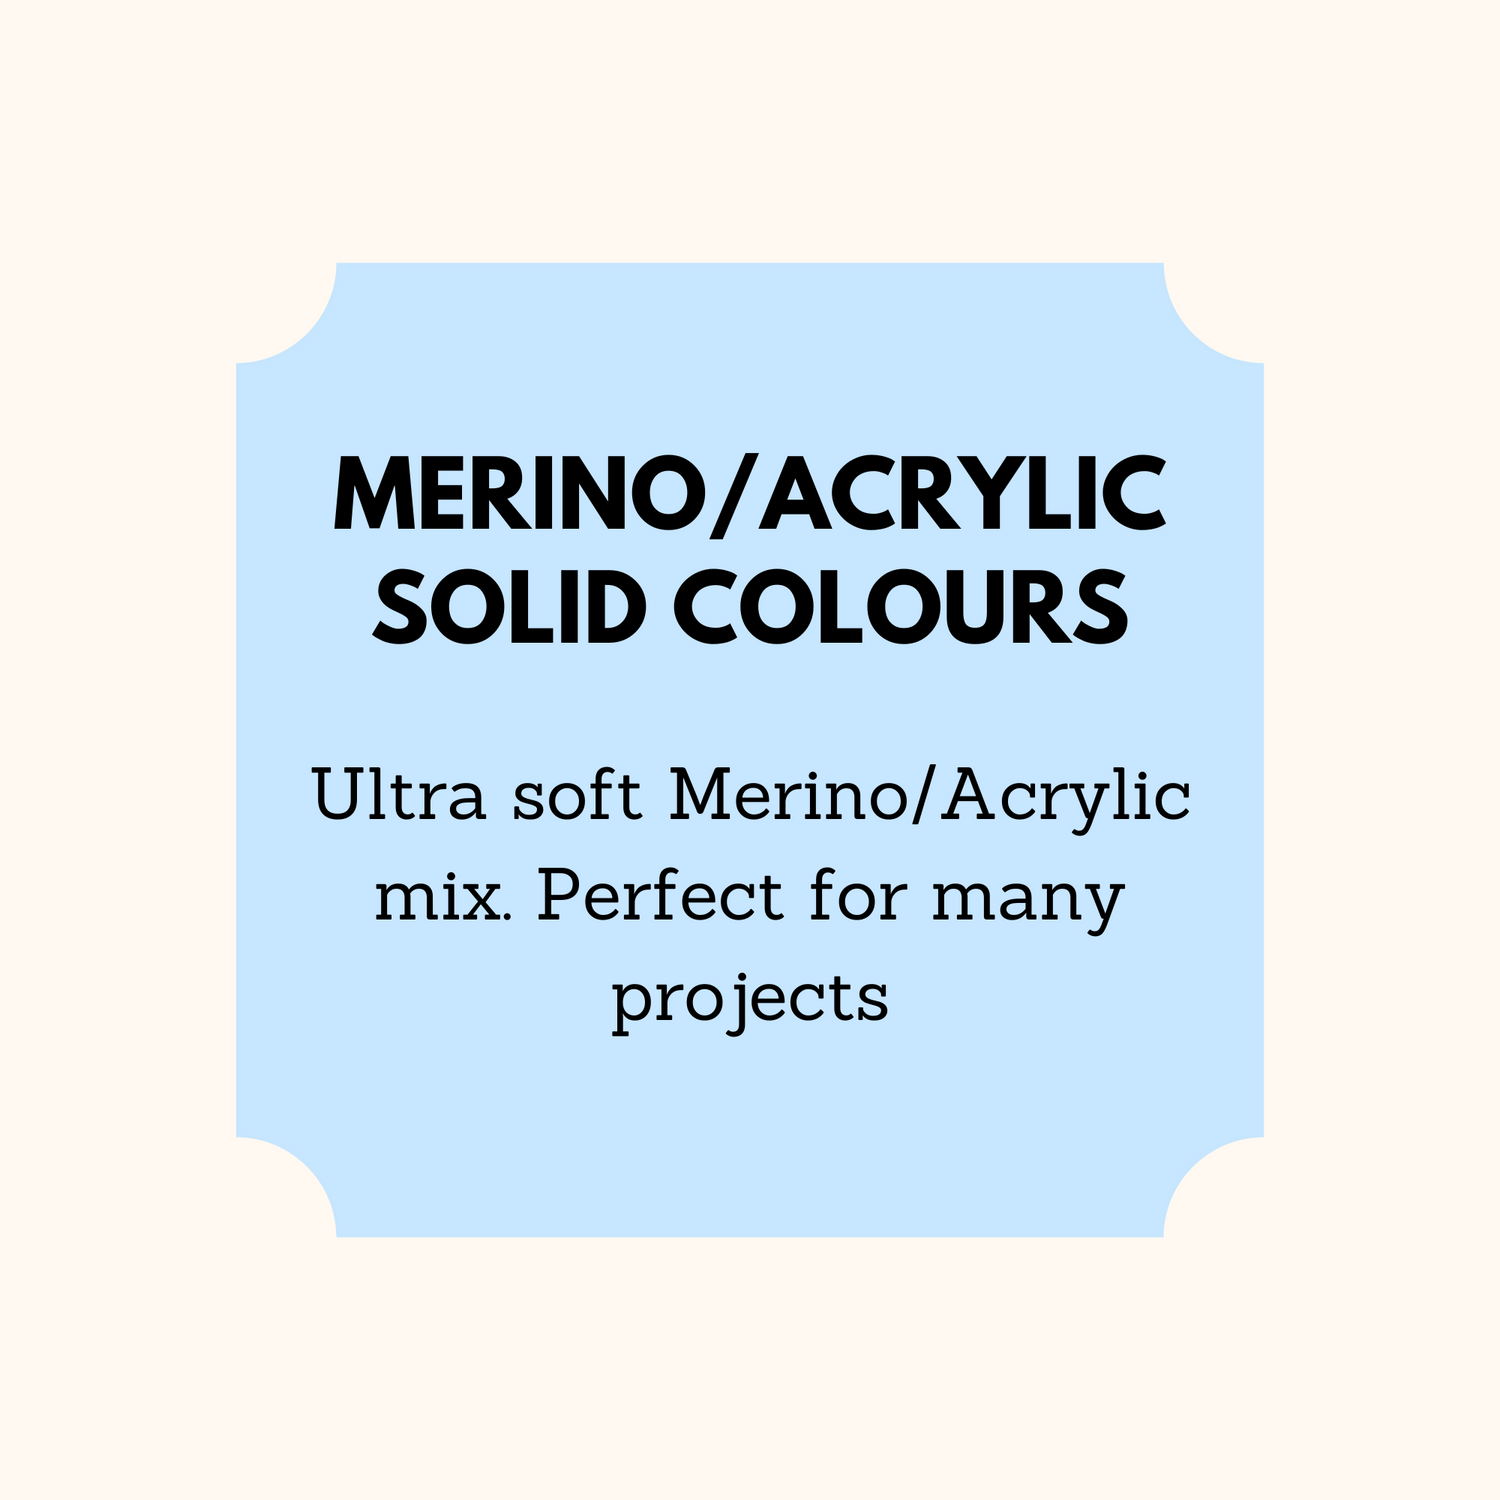 Merino/Acrylic Solid Colours